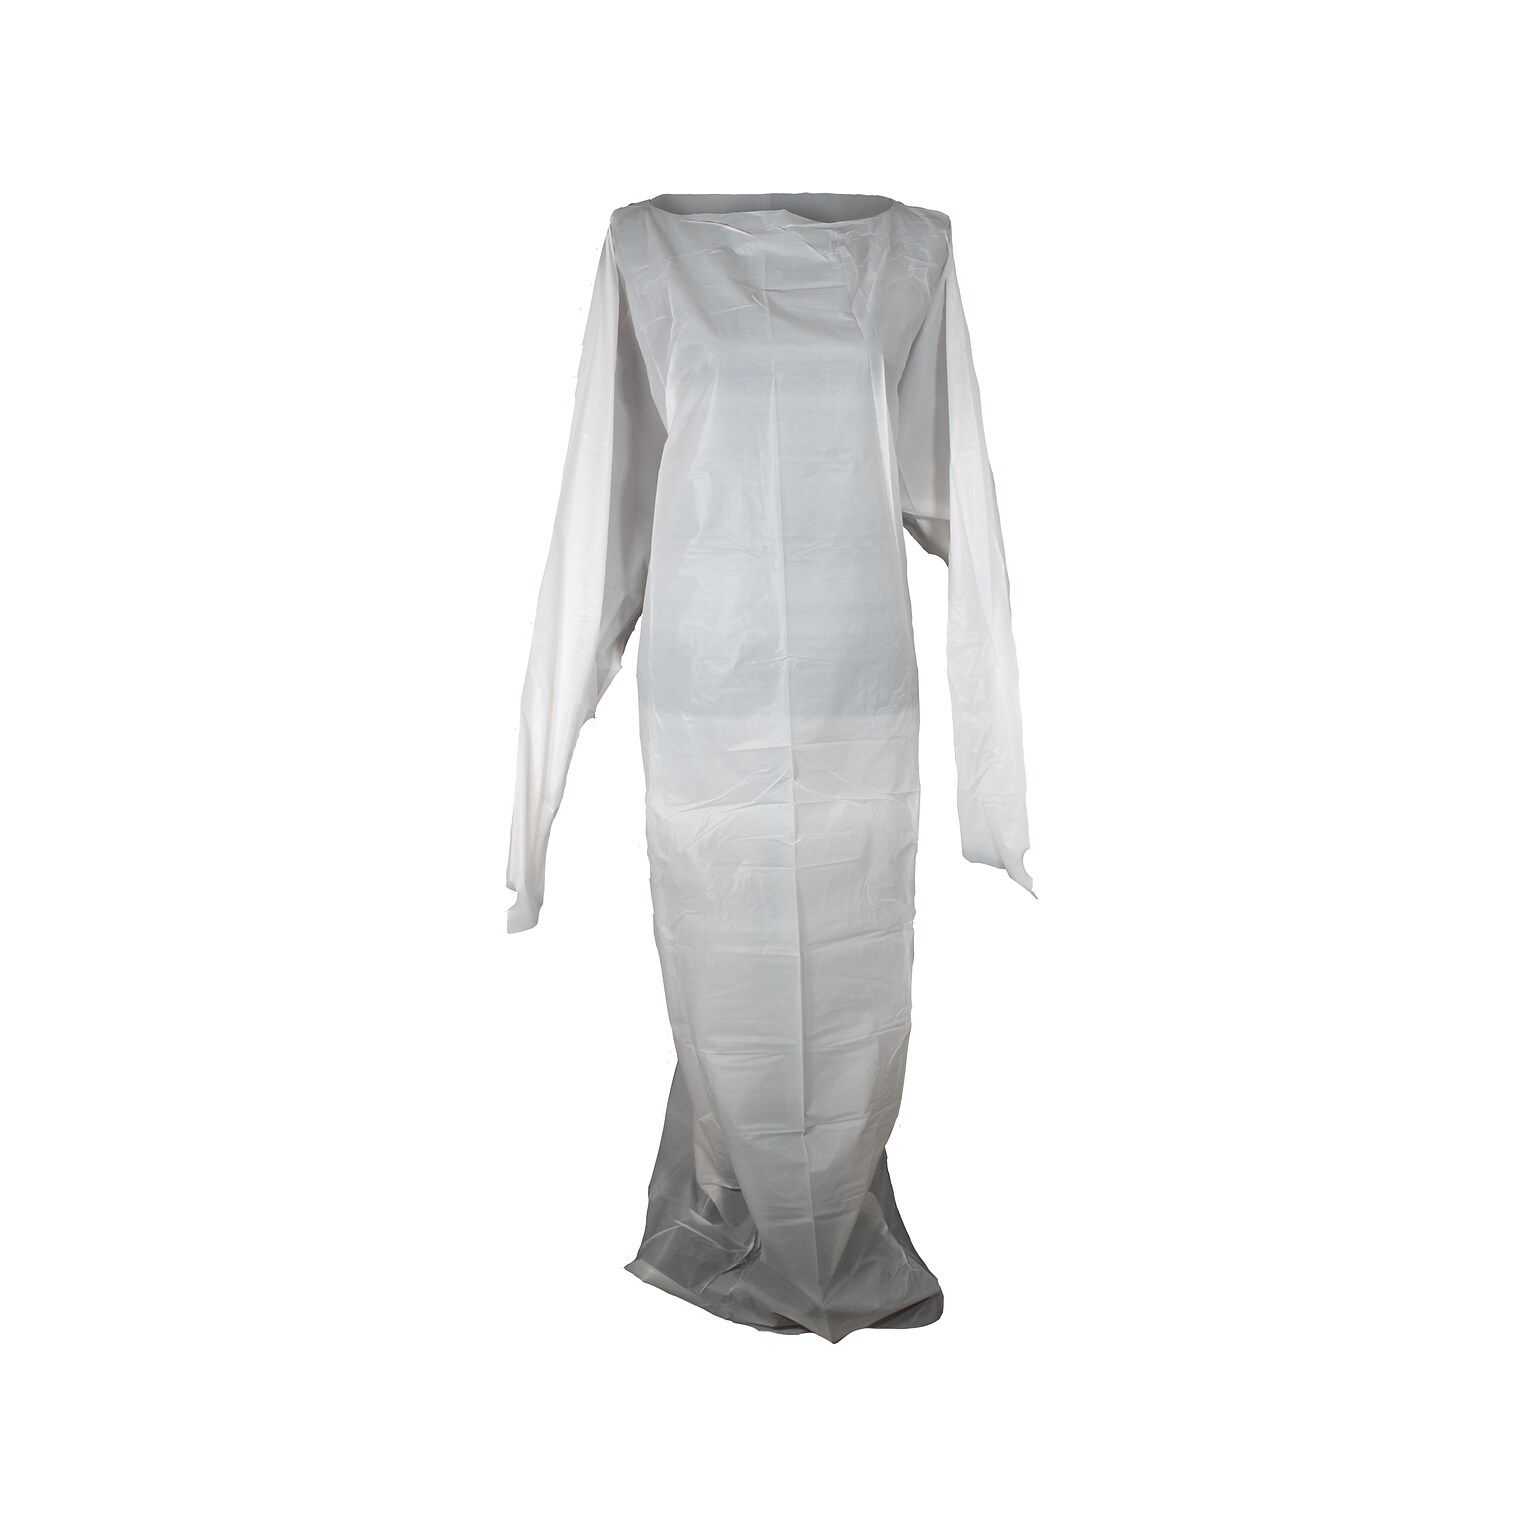 Unimed Unisex CPE Isolation Gown, White, 60, 100/Carton (WTLG102760W)